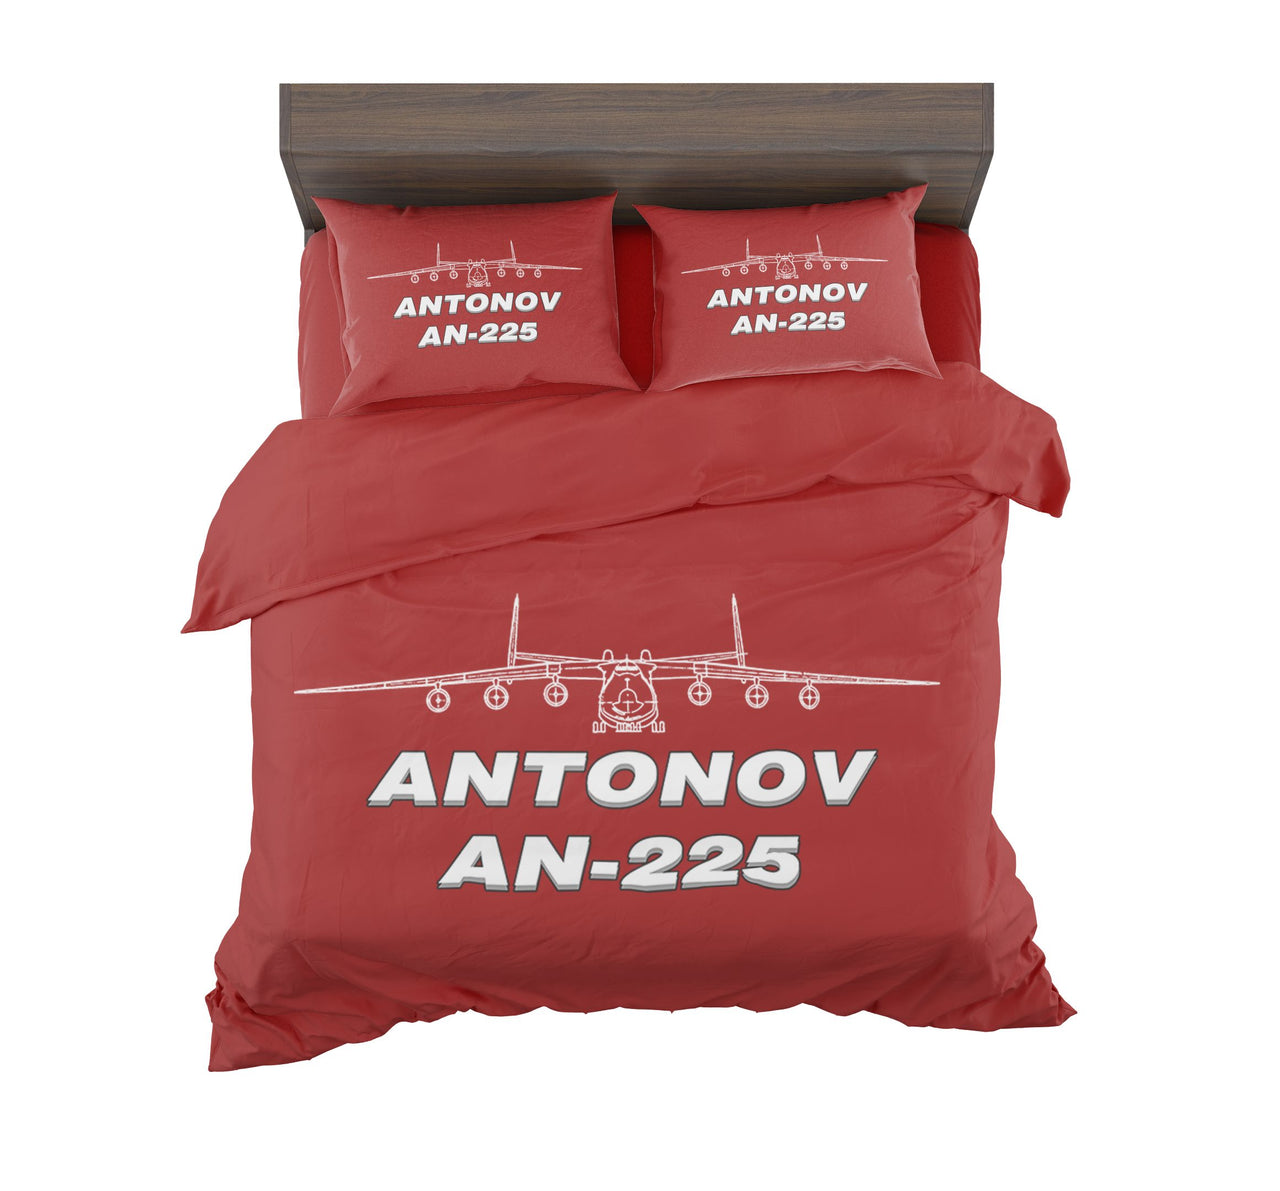 Antonov AN-225 (26) Designed Bedding Sets